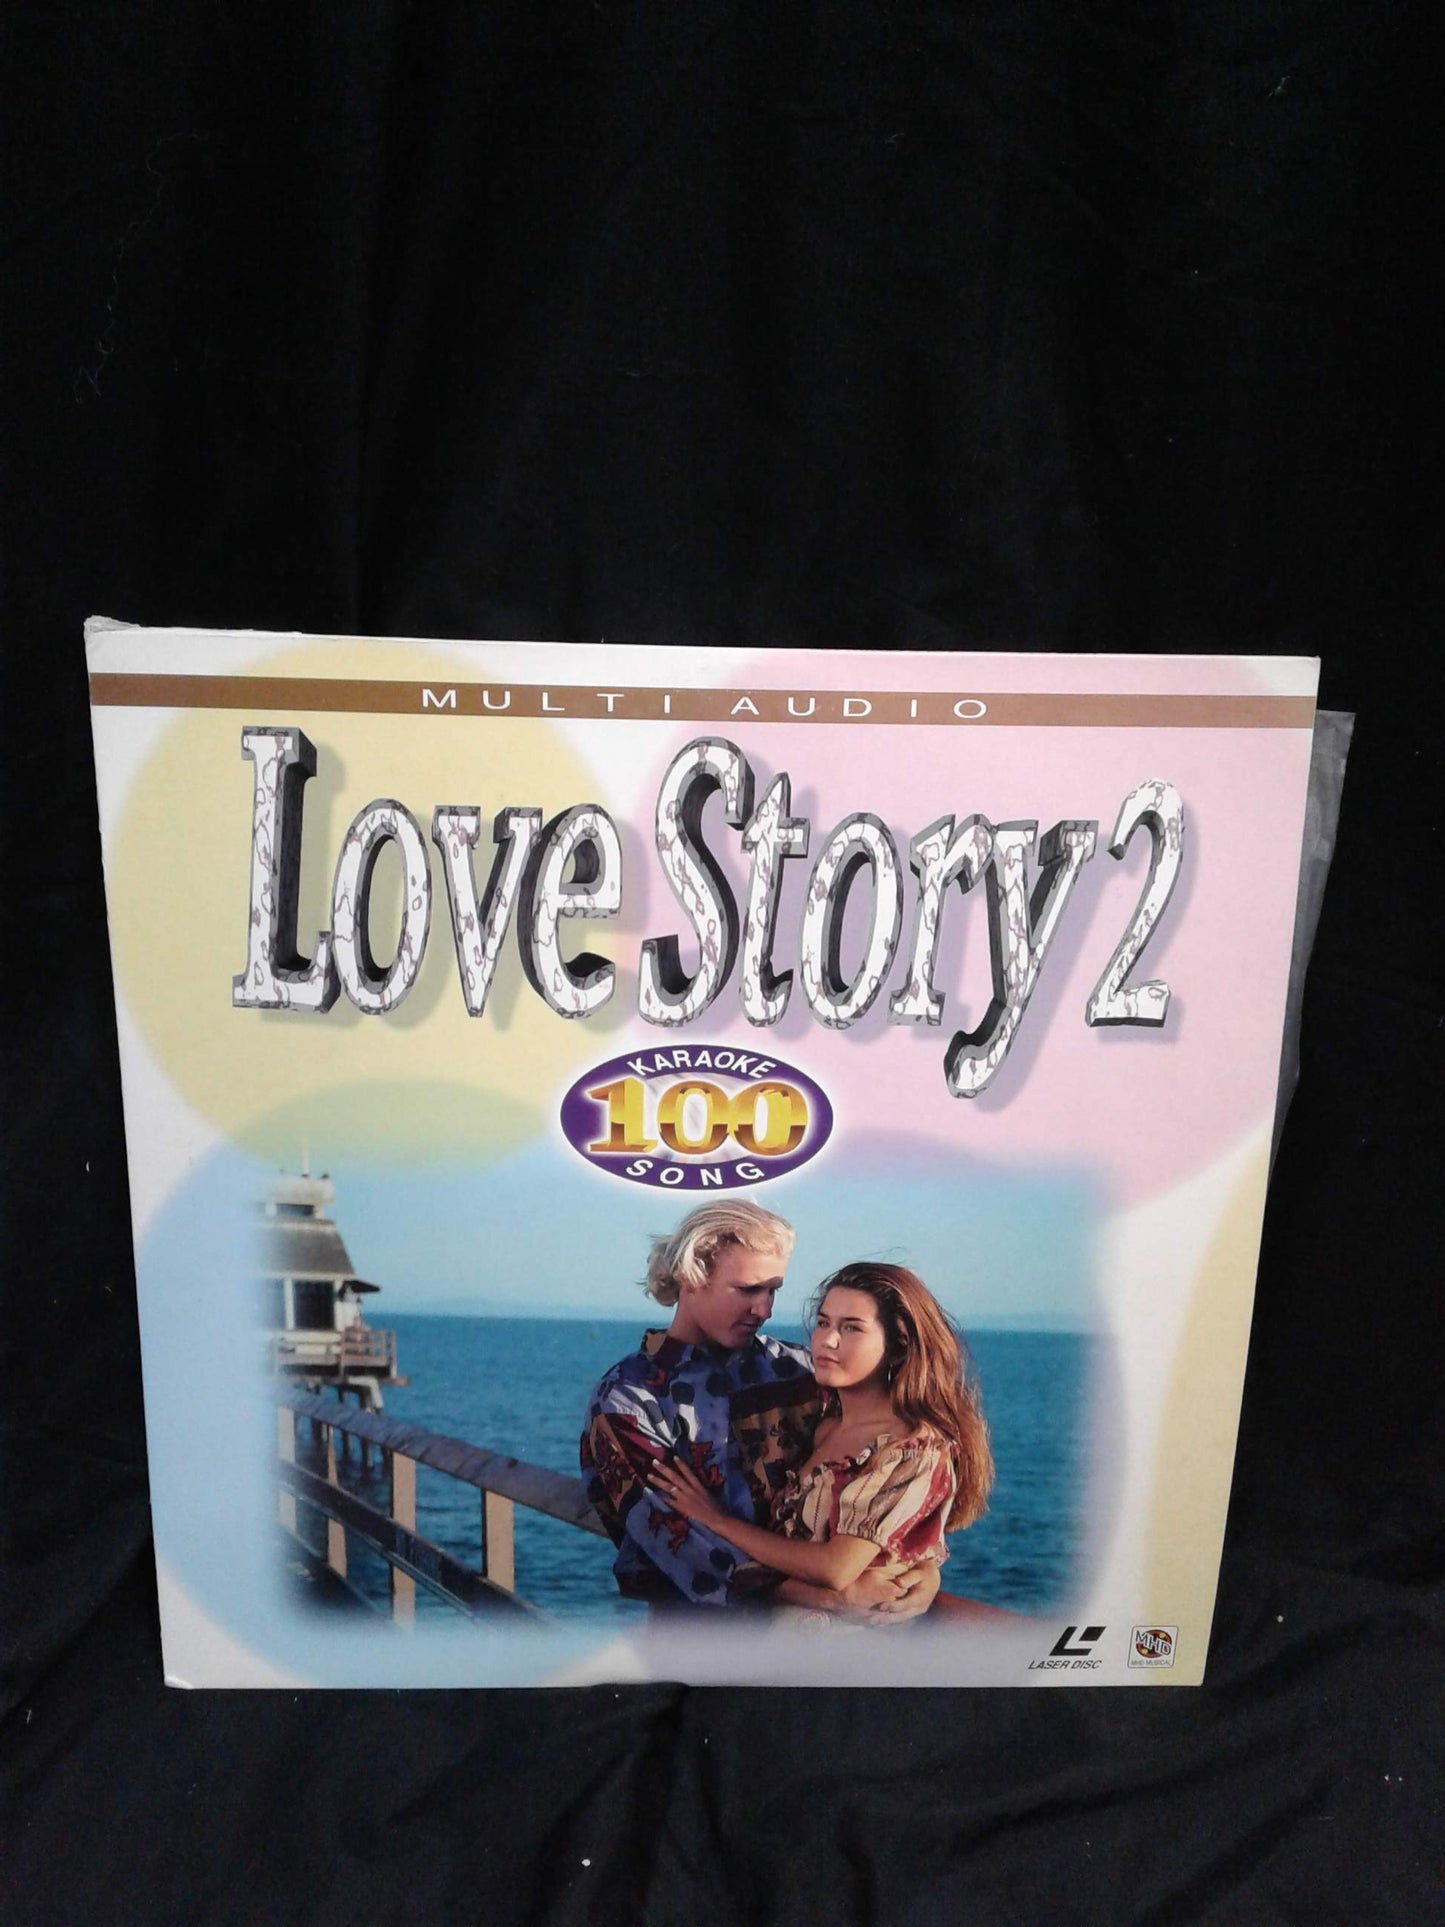 Vinyle Love story 2